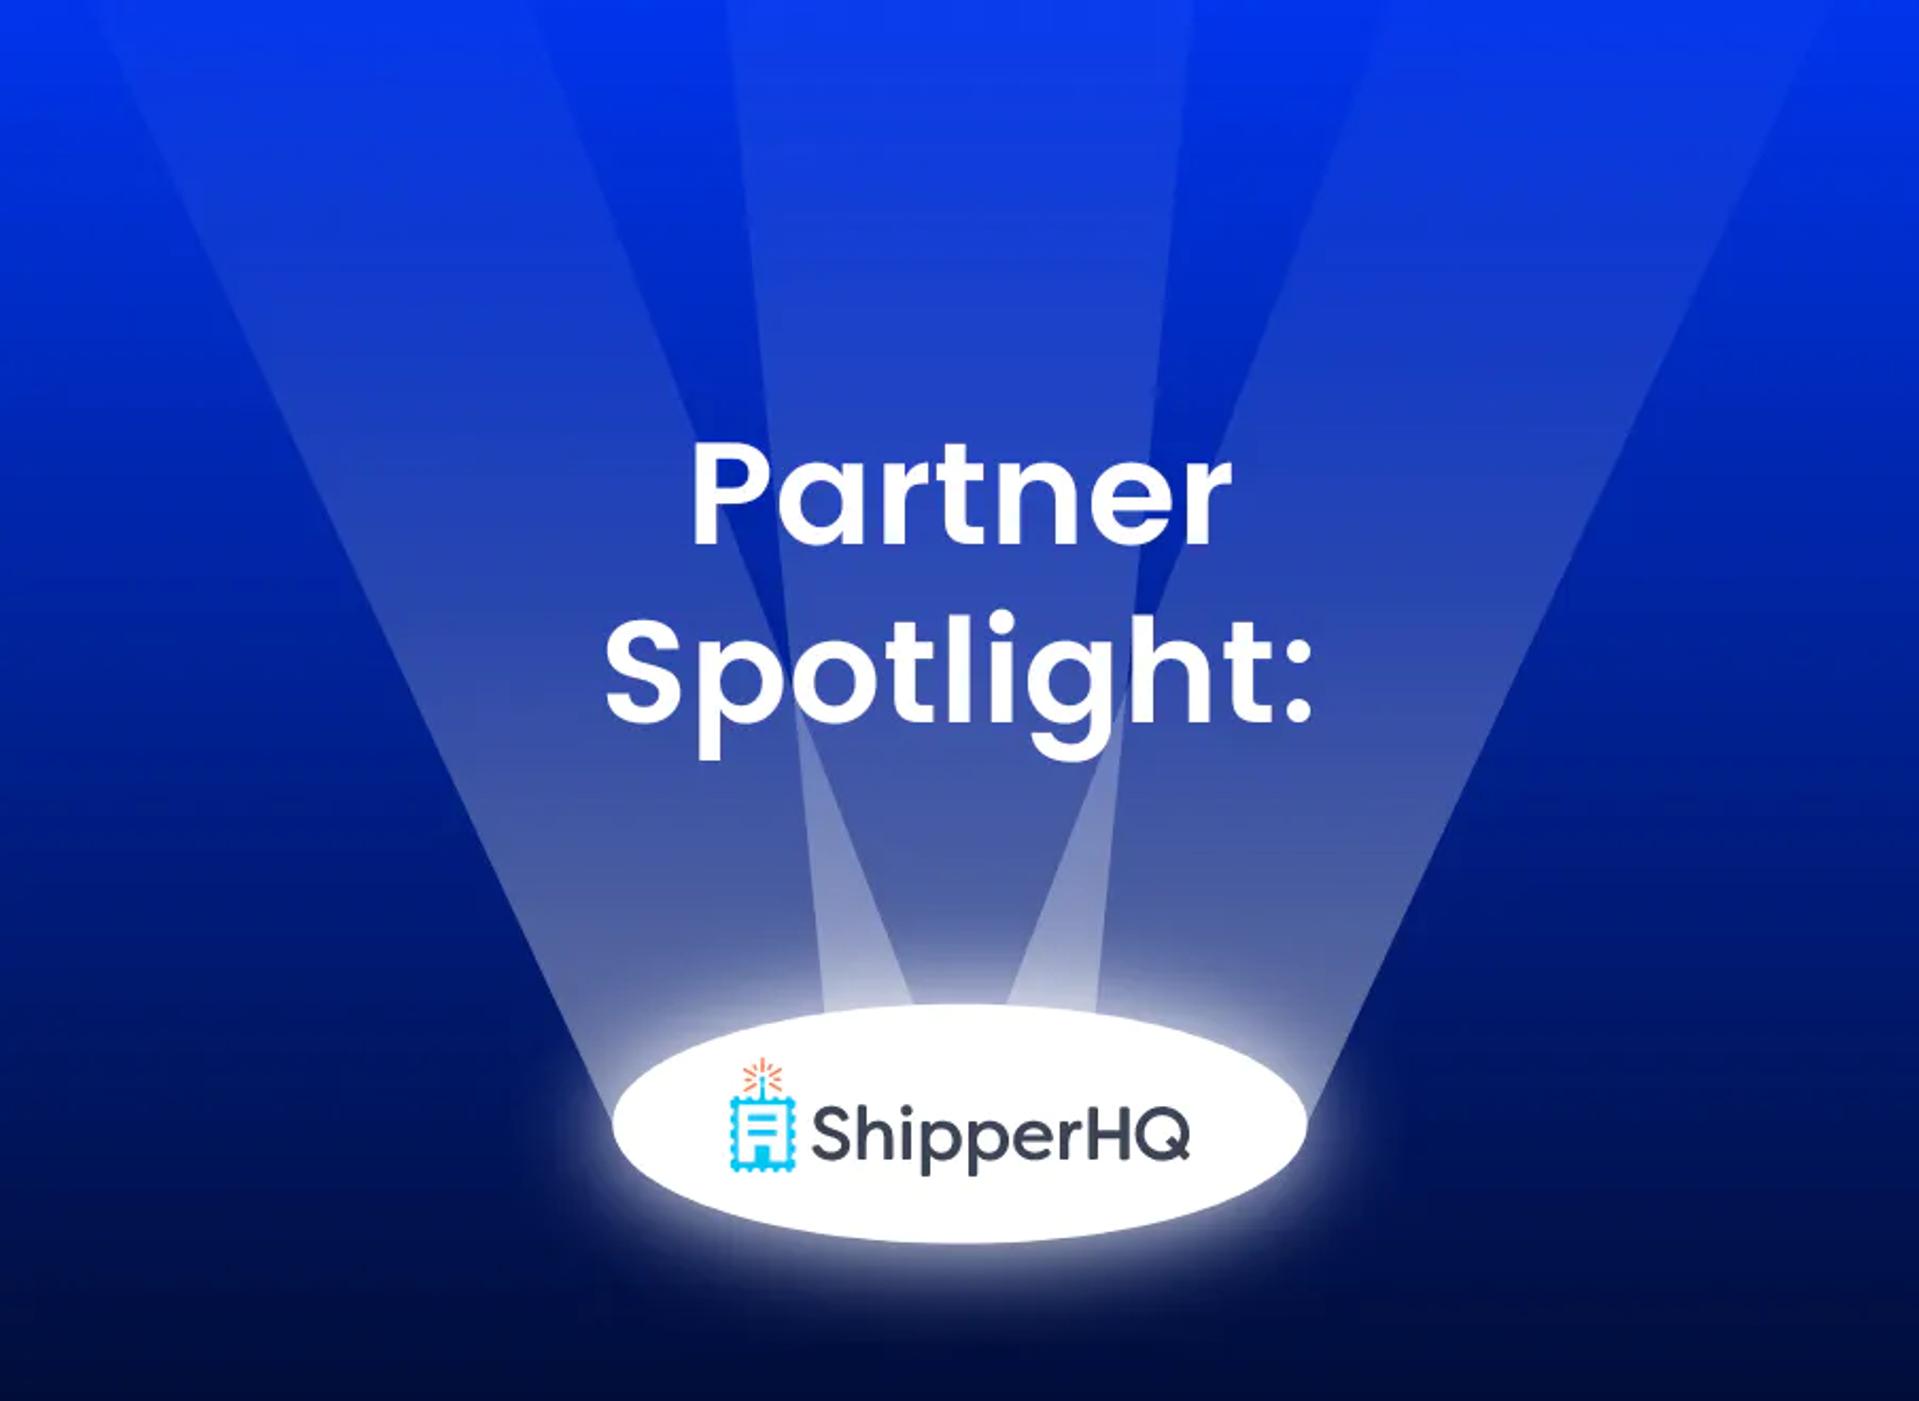 A spotlight on the ShipperHQ logo